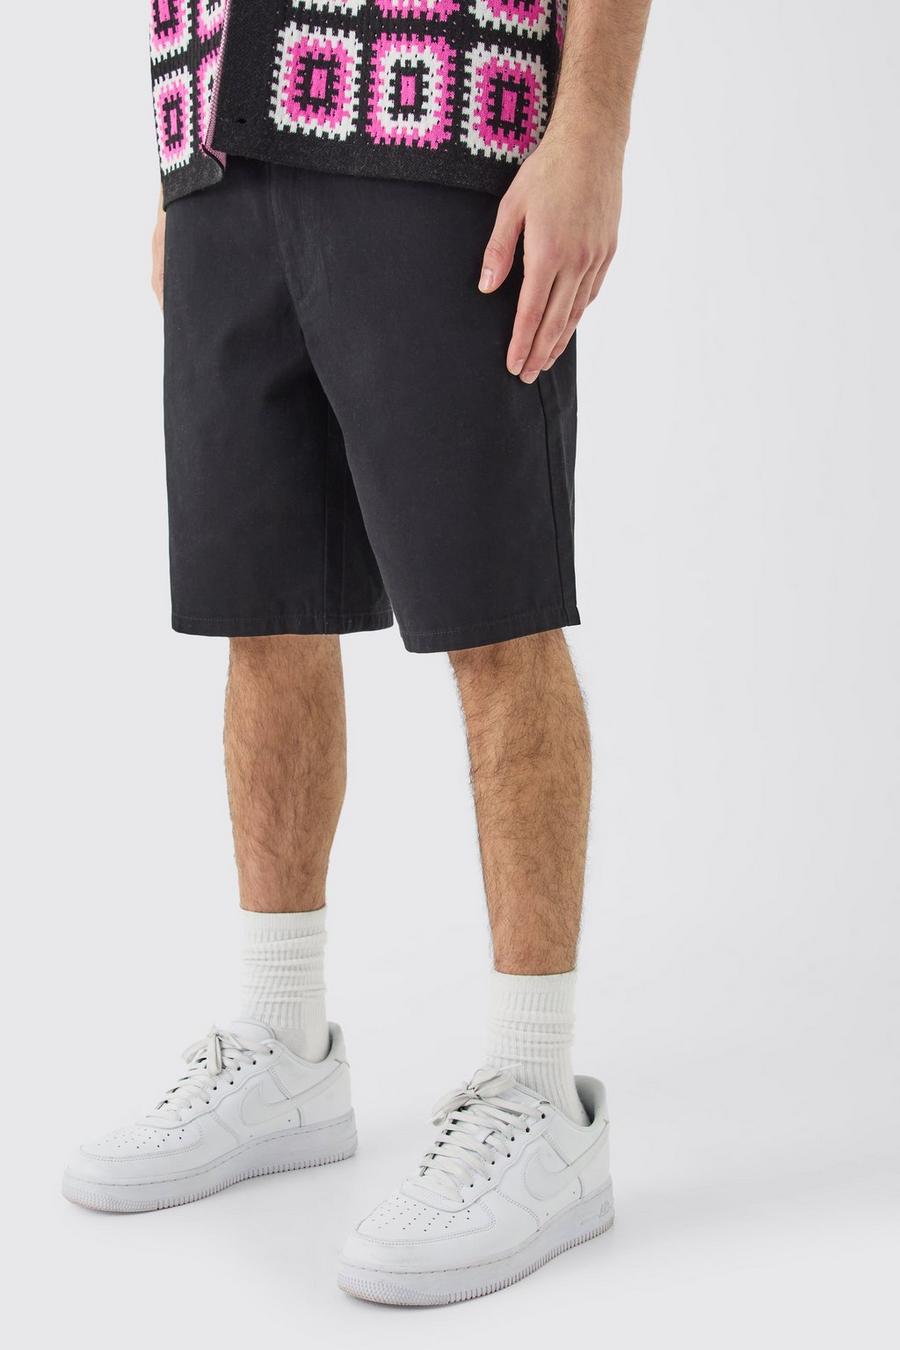 Lockere schwarze Shorts, Black image number 1